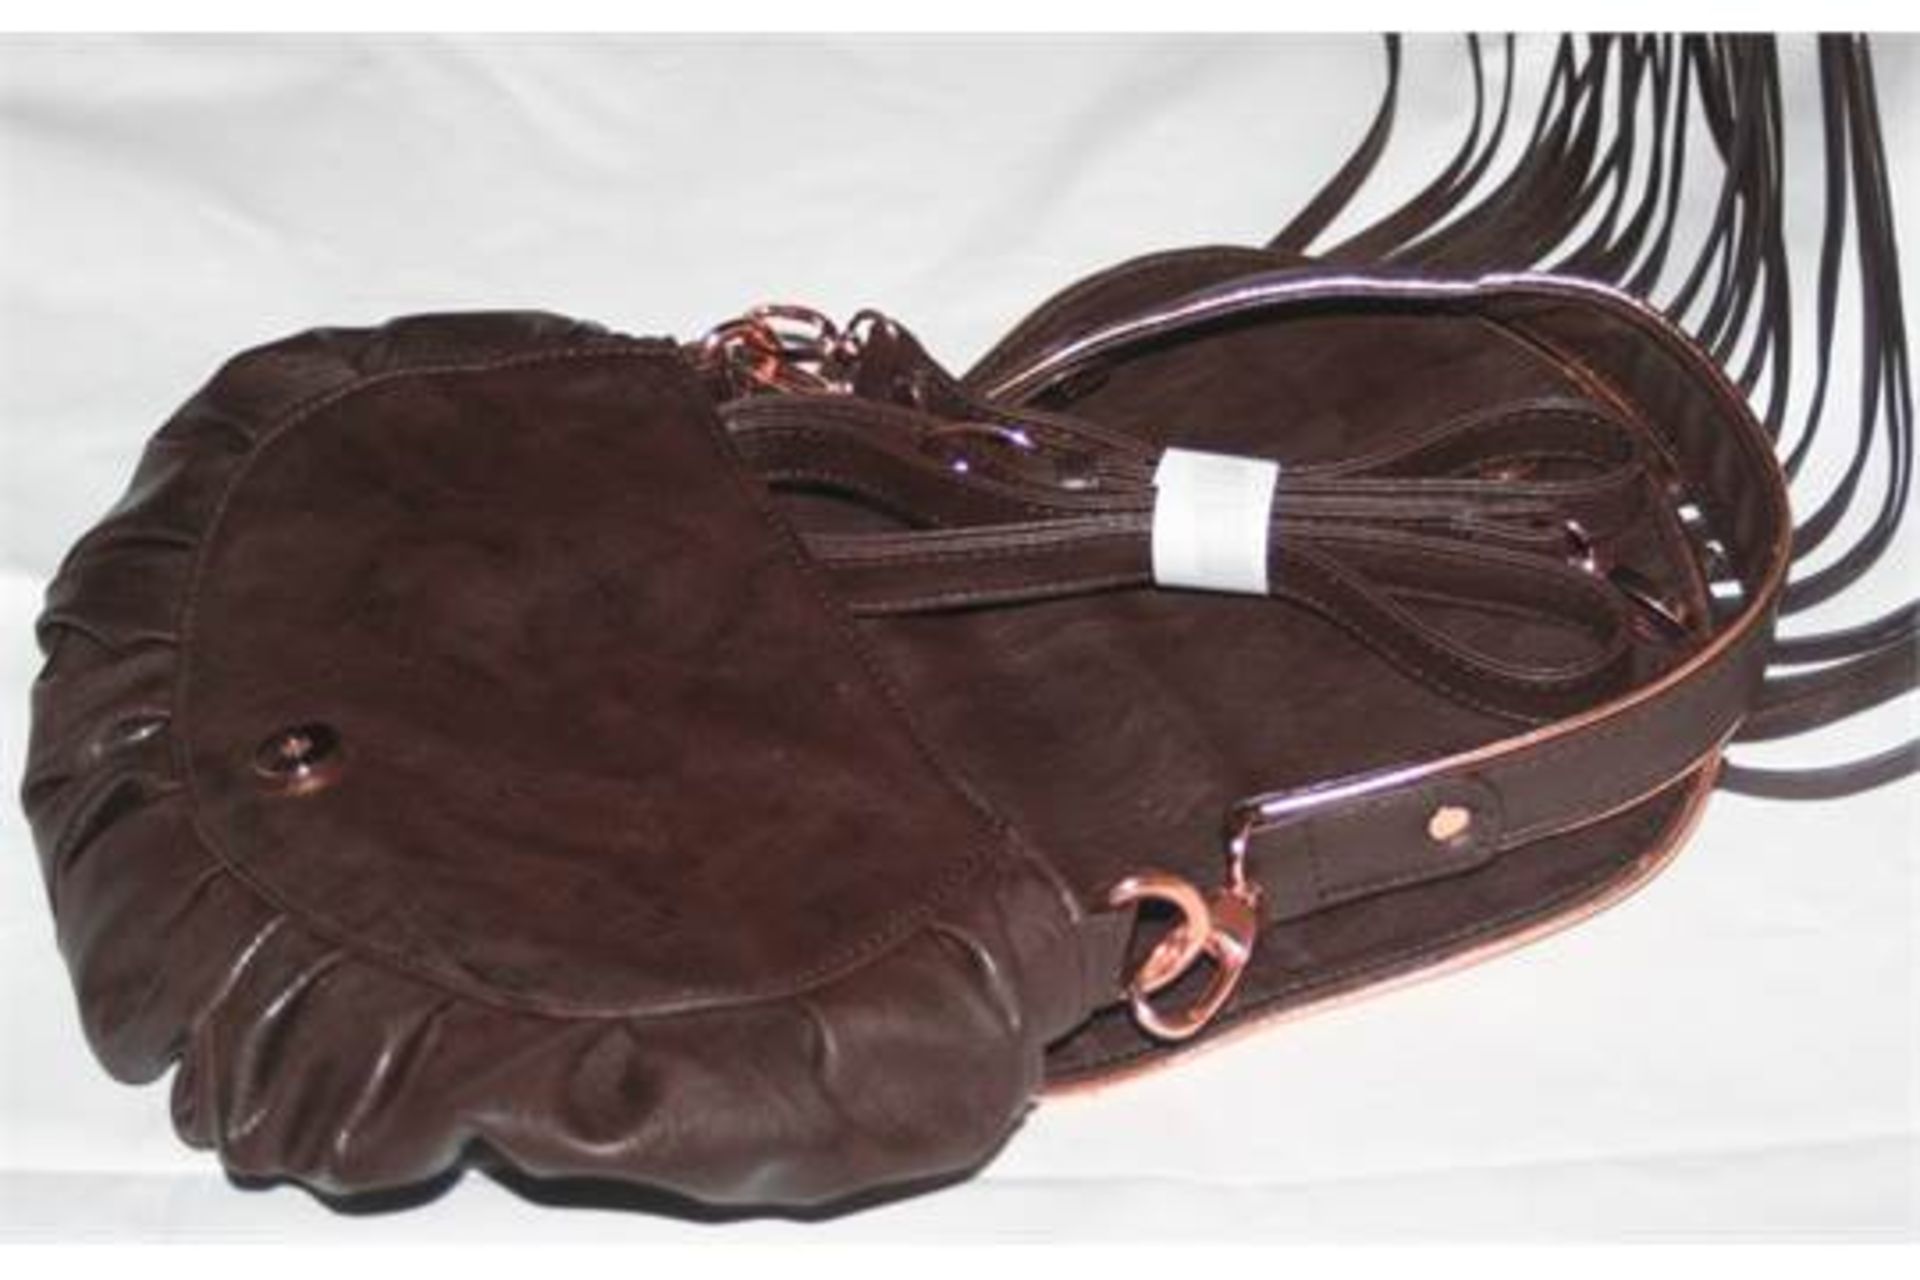 1 x Zandra Rhodes Jada Brown Tassel Fringe Satchel Handbag - Brand New Stock - PU Leather - - Image 4 of 4